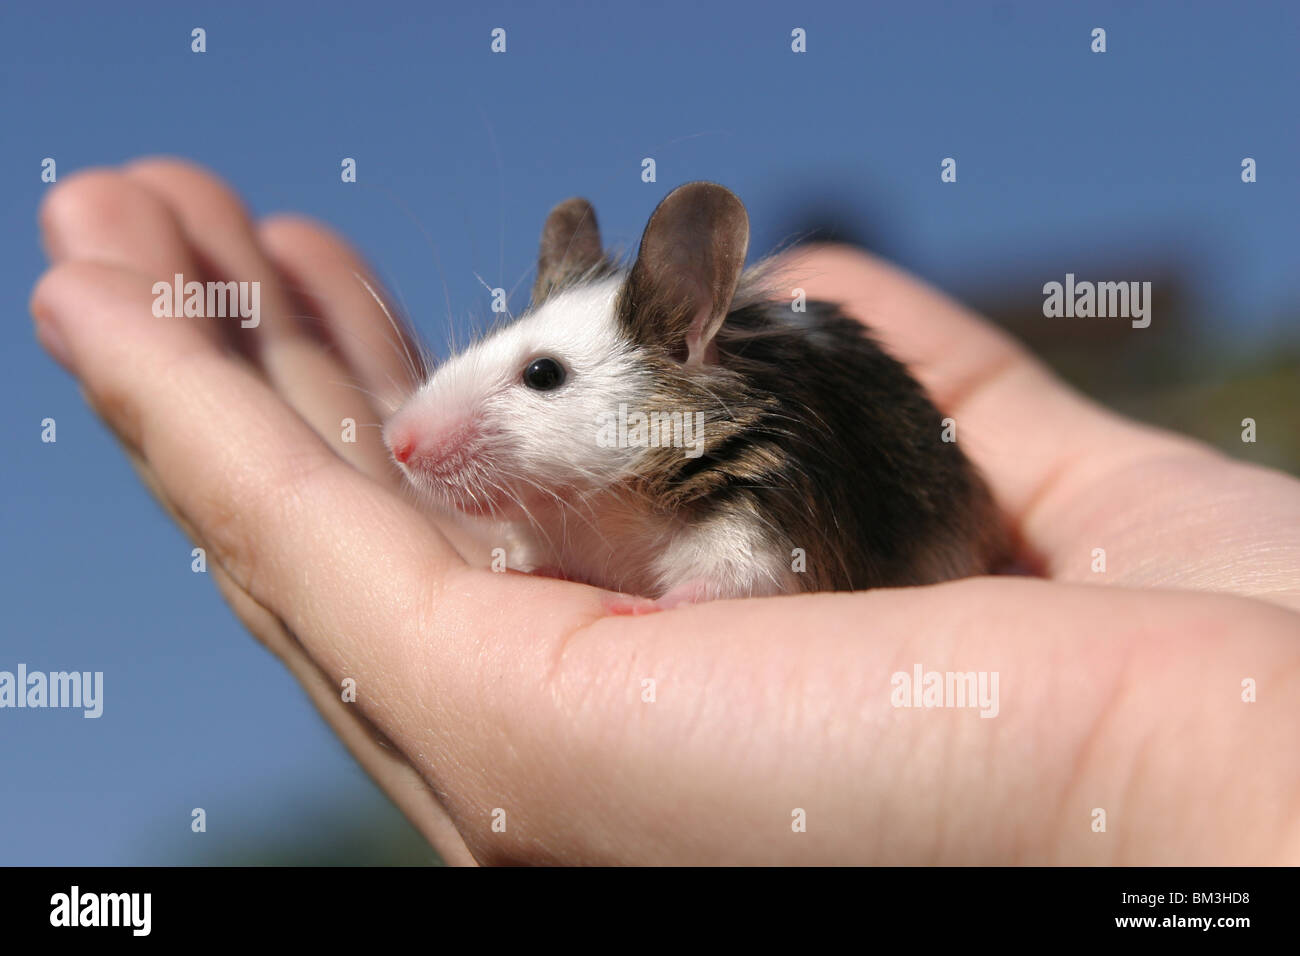 Maus auf der Hand / mouse on hand Stock Photo